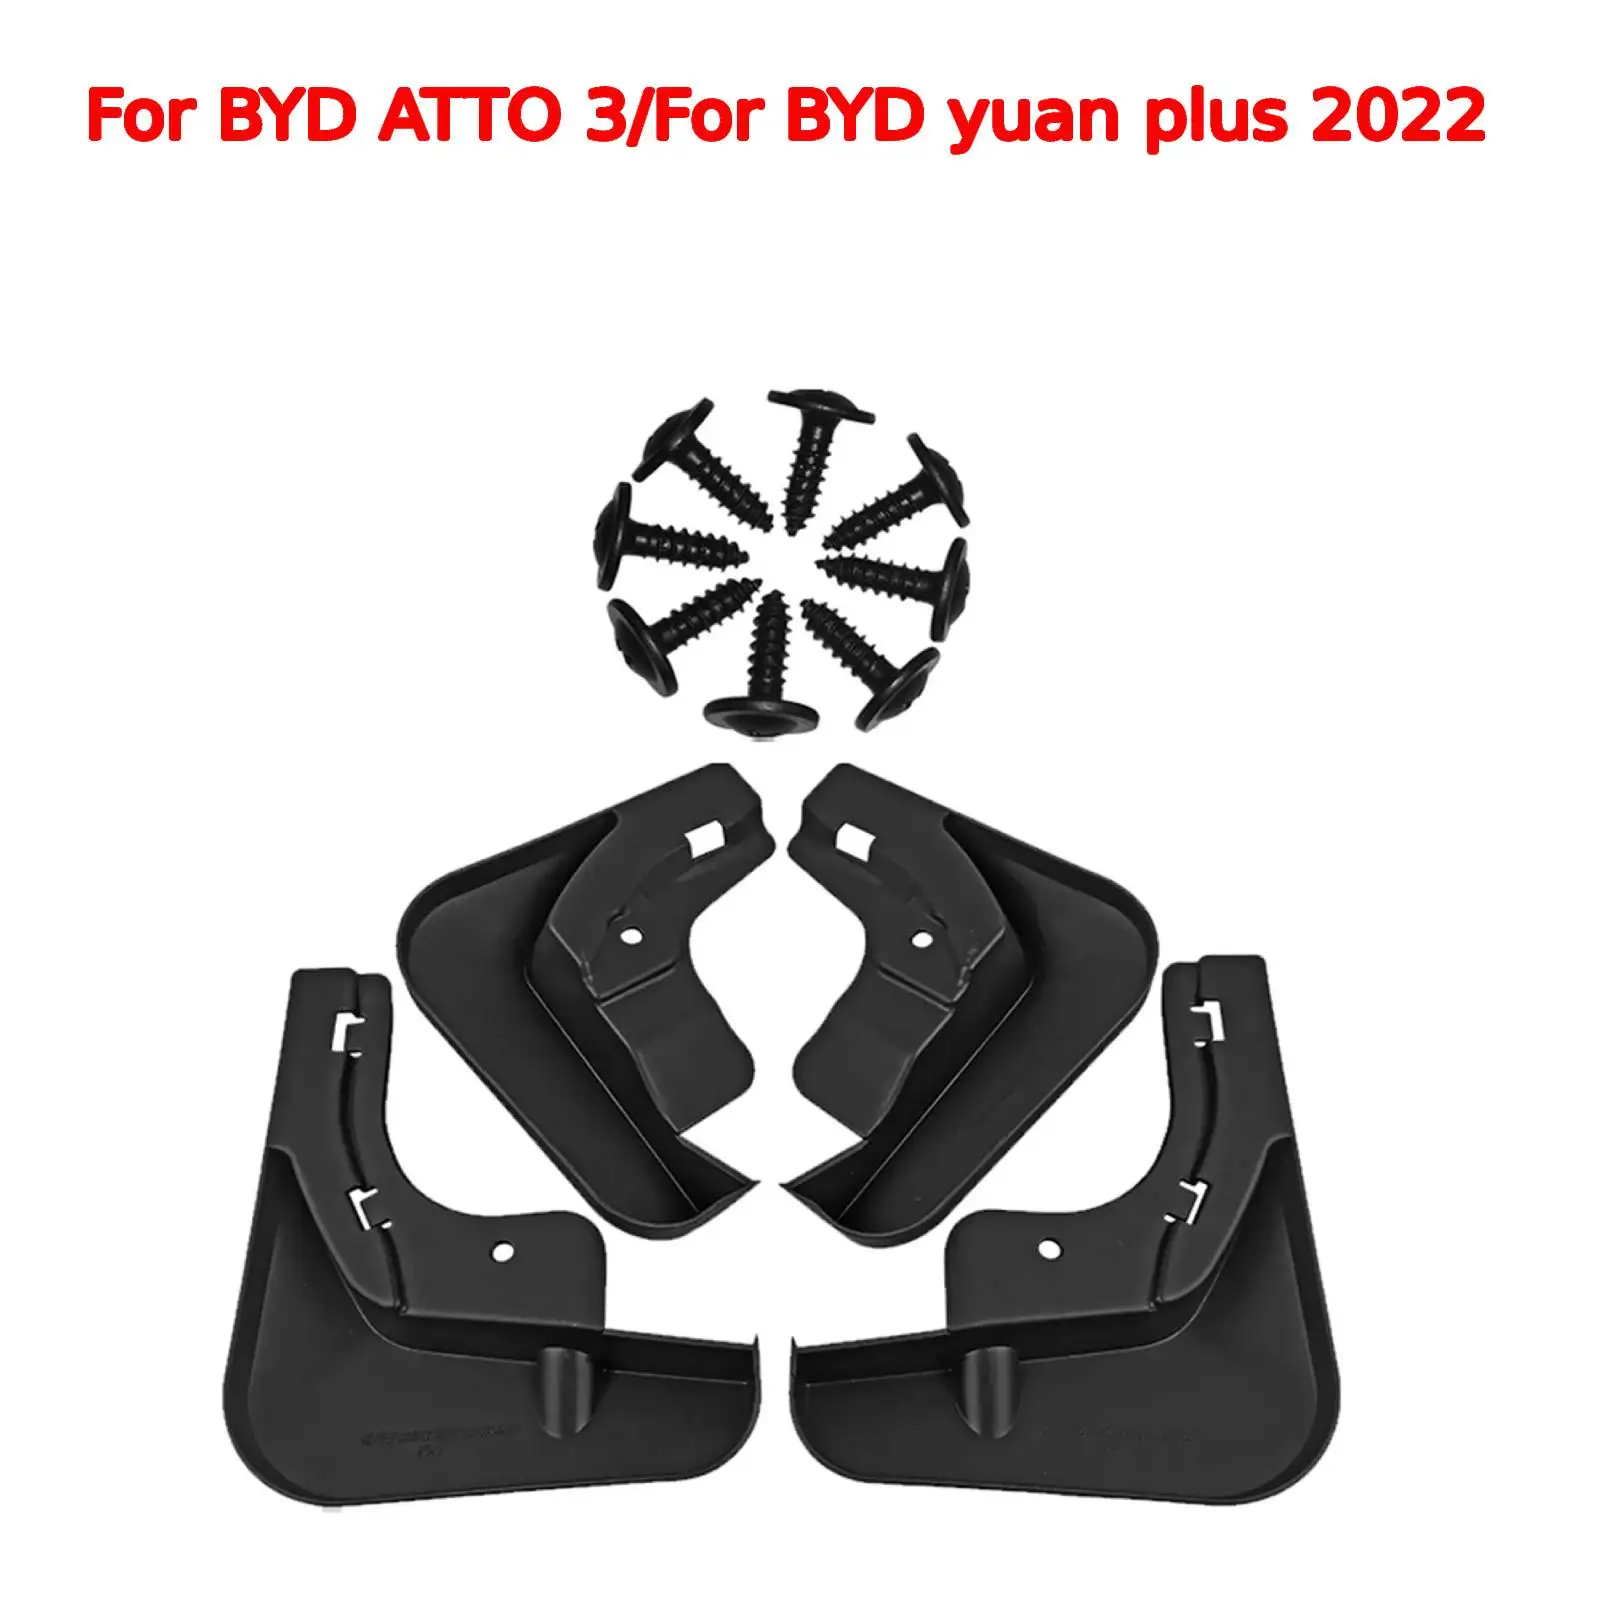 

4pcs Splash Mudguard fender For BYD ATTO 3 /For BYD yuan plus 2022 Antisplash Mudflaps Replaces for Car front rear Splash Guards